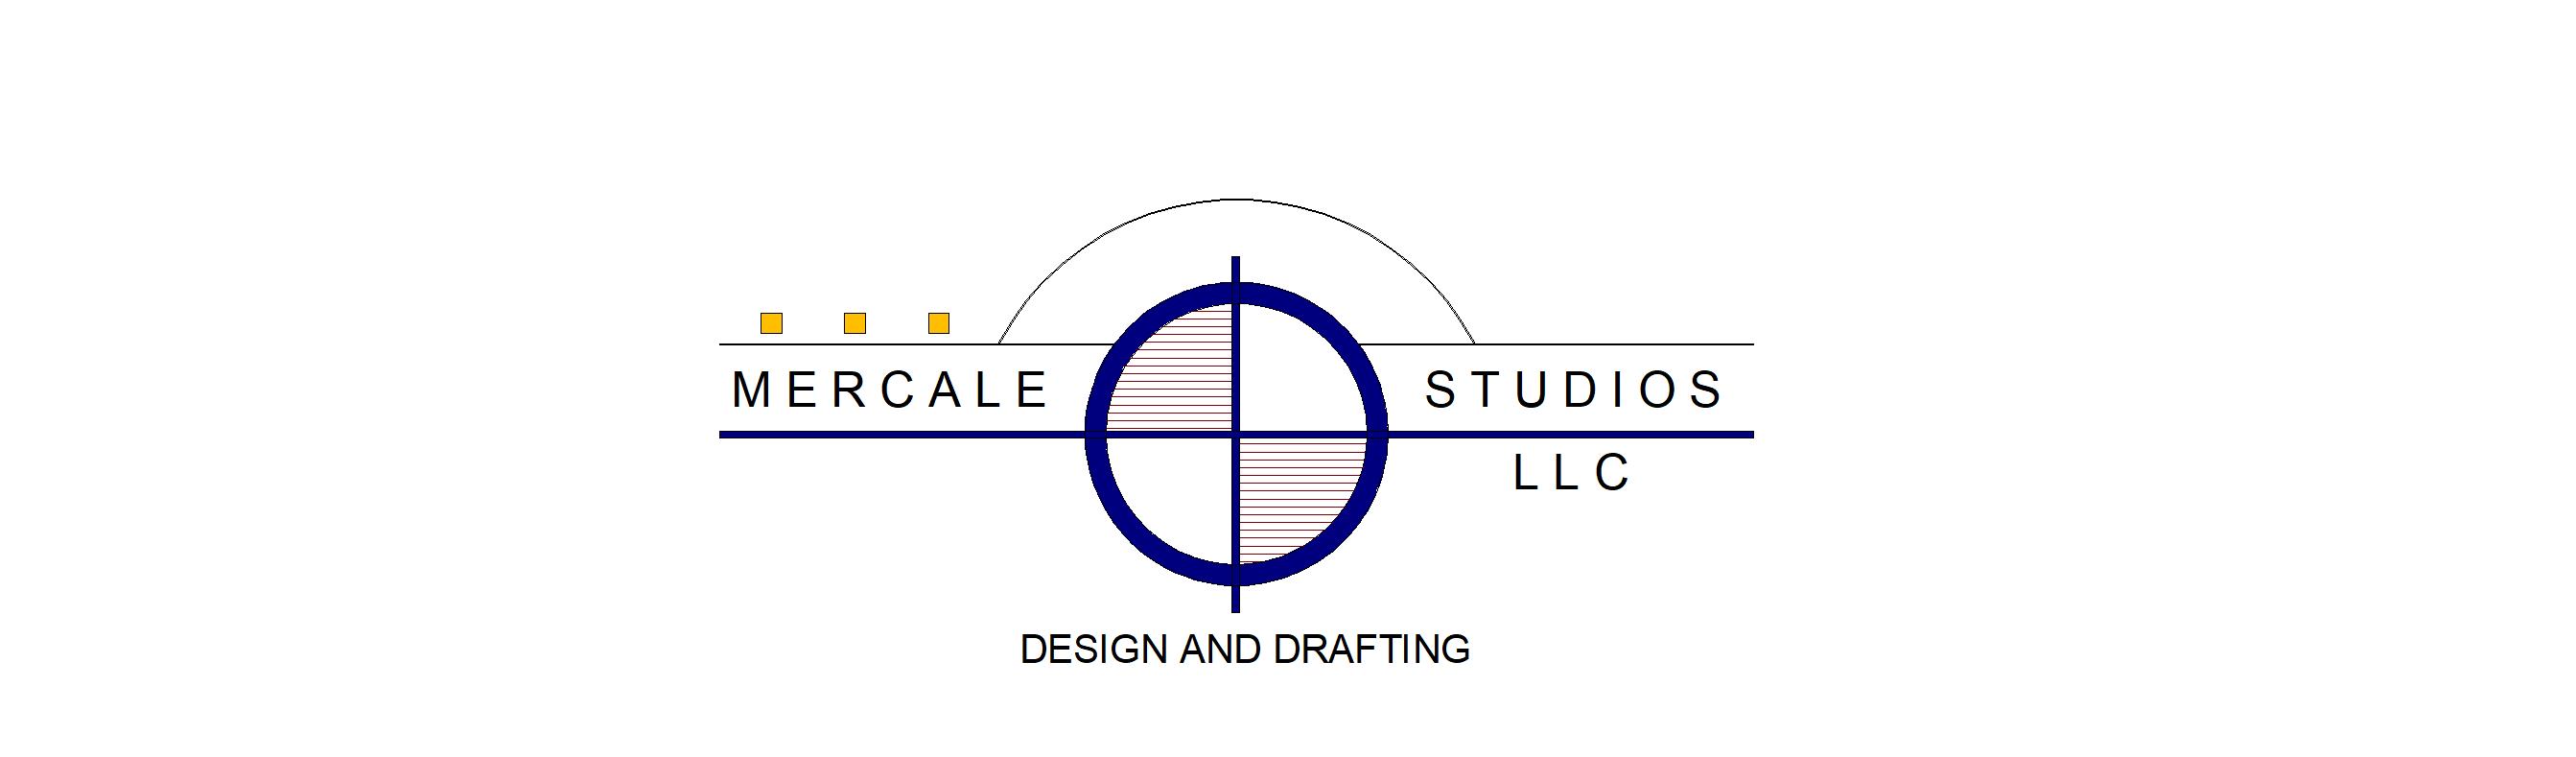 Mercale Studios, LLC Logo